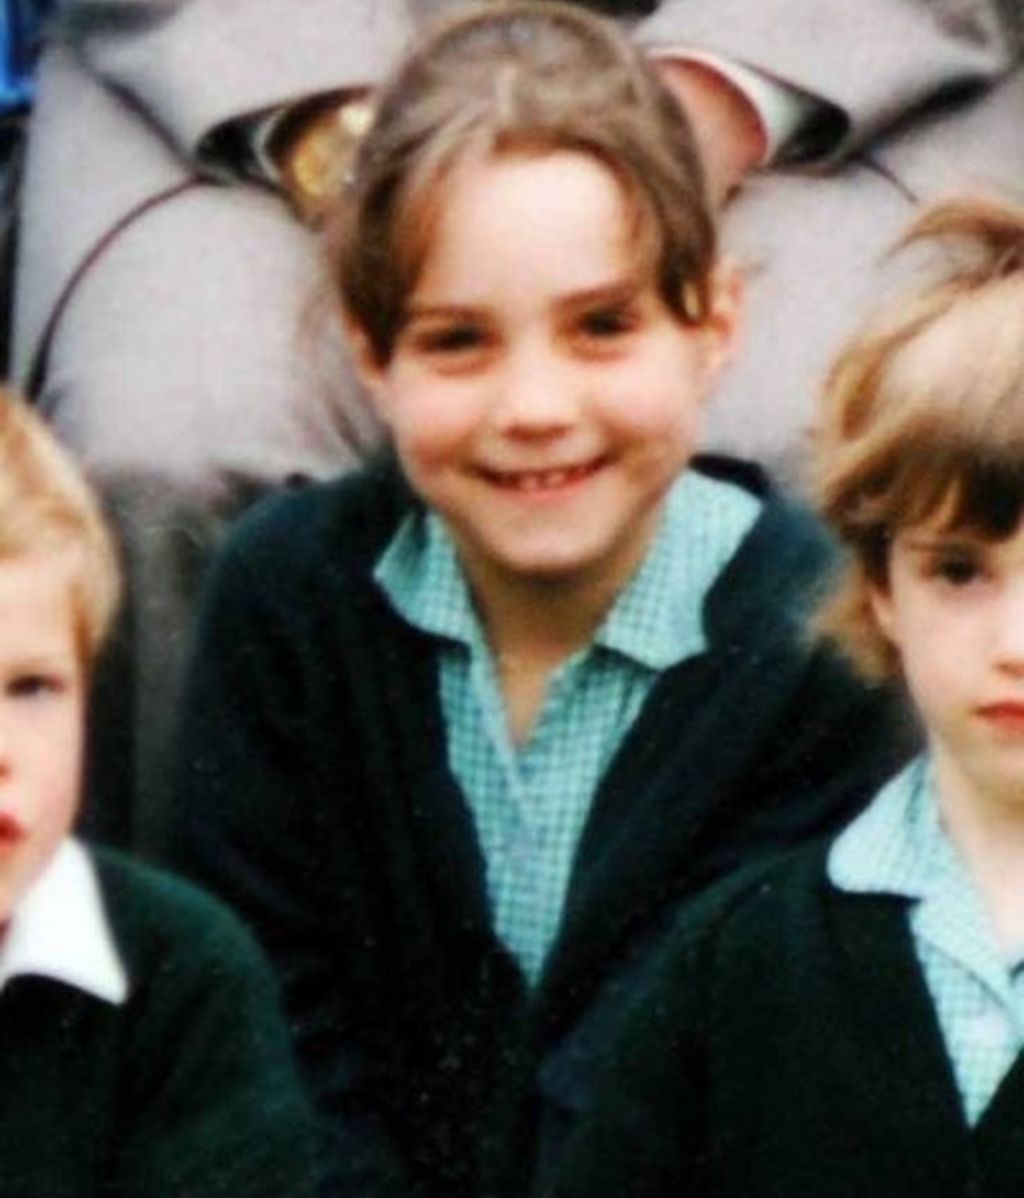 La vida de Kate Middleton en 10 imágenes